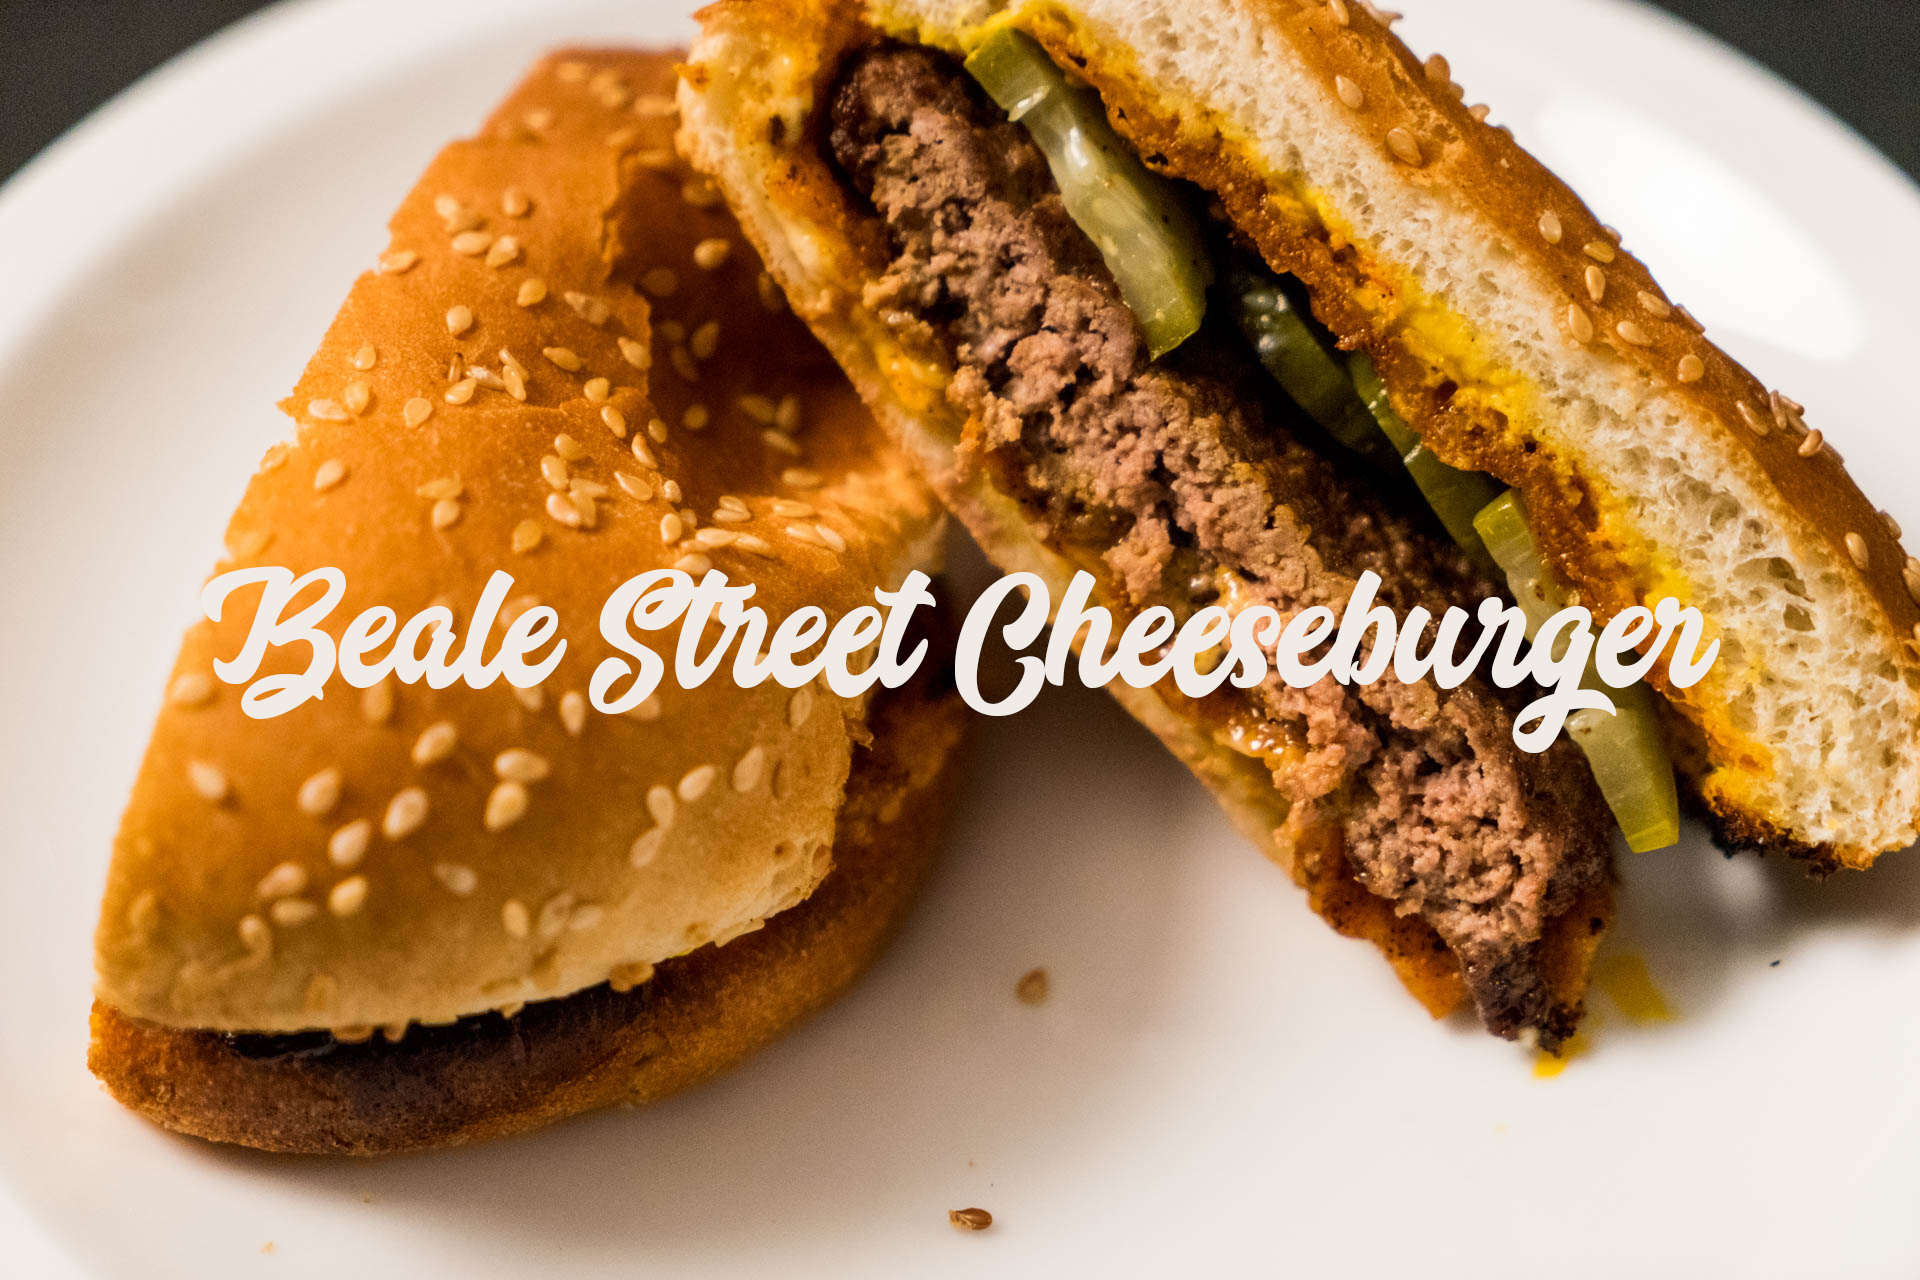 Beale Street Cheeseburger